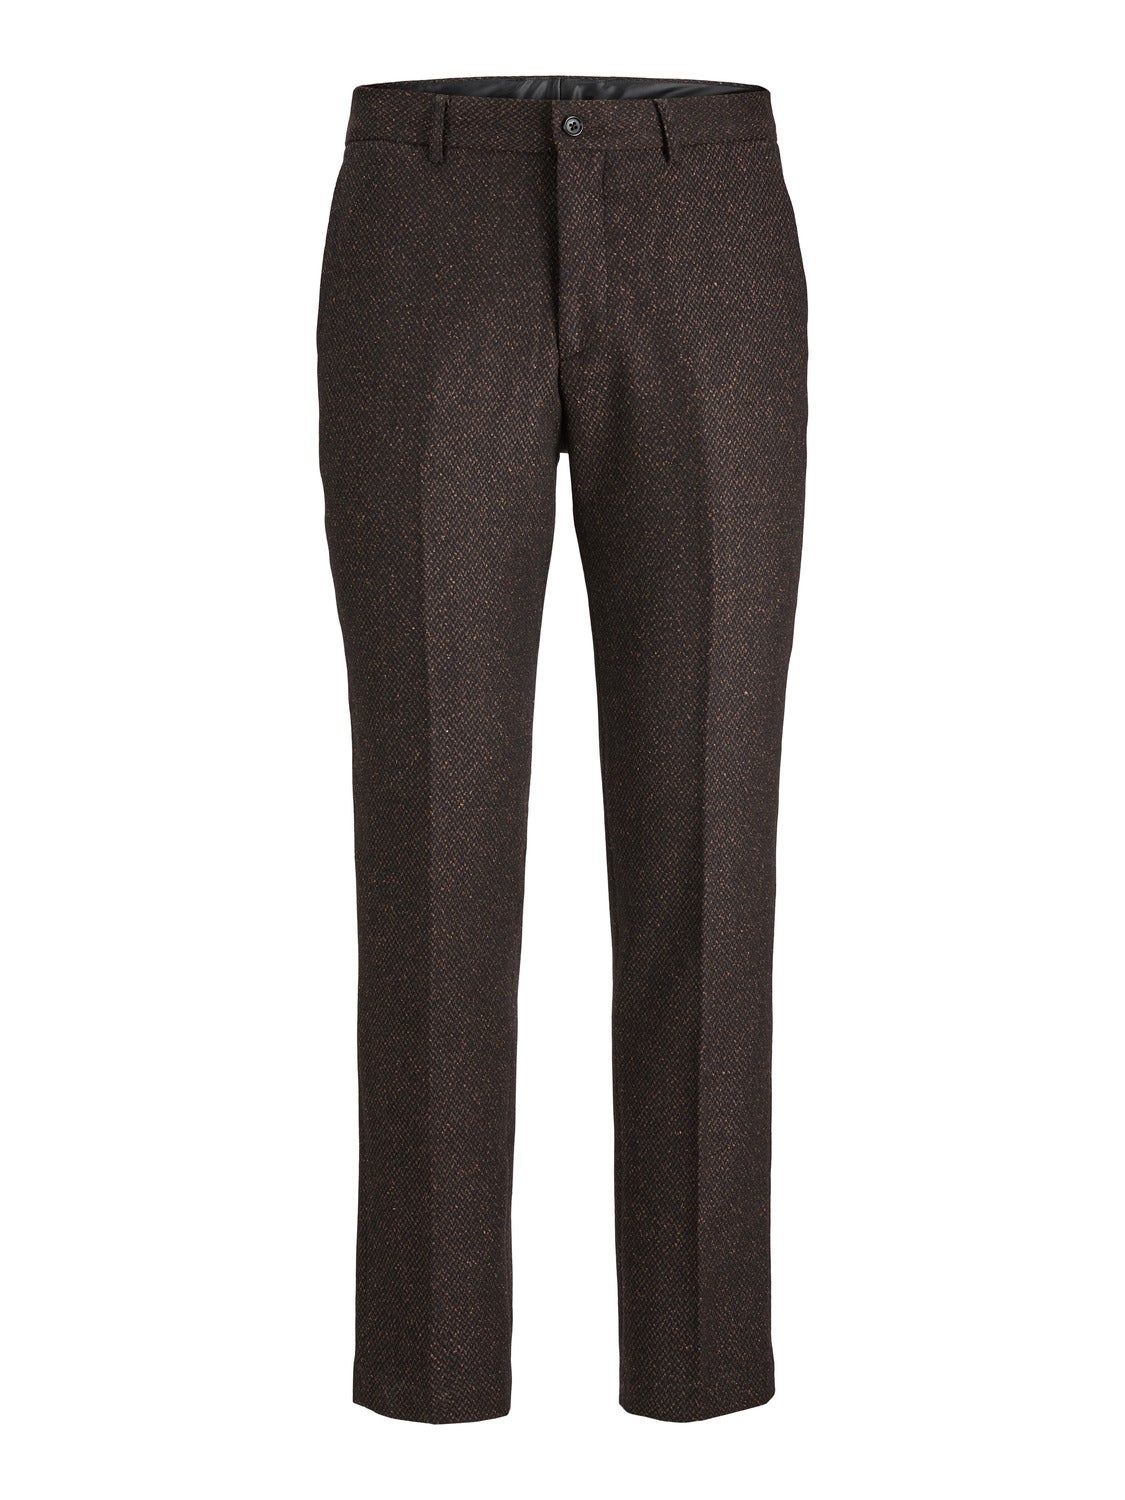 Dark Brown Cotton Dress Pants, Size 56 – outtlet.com